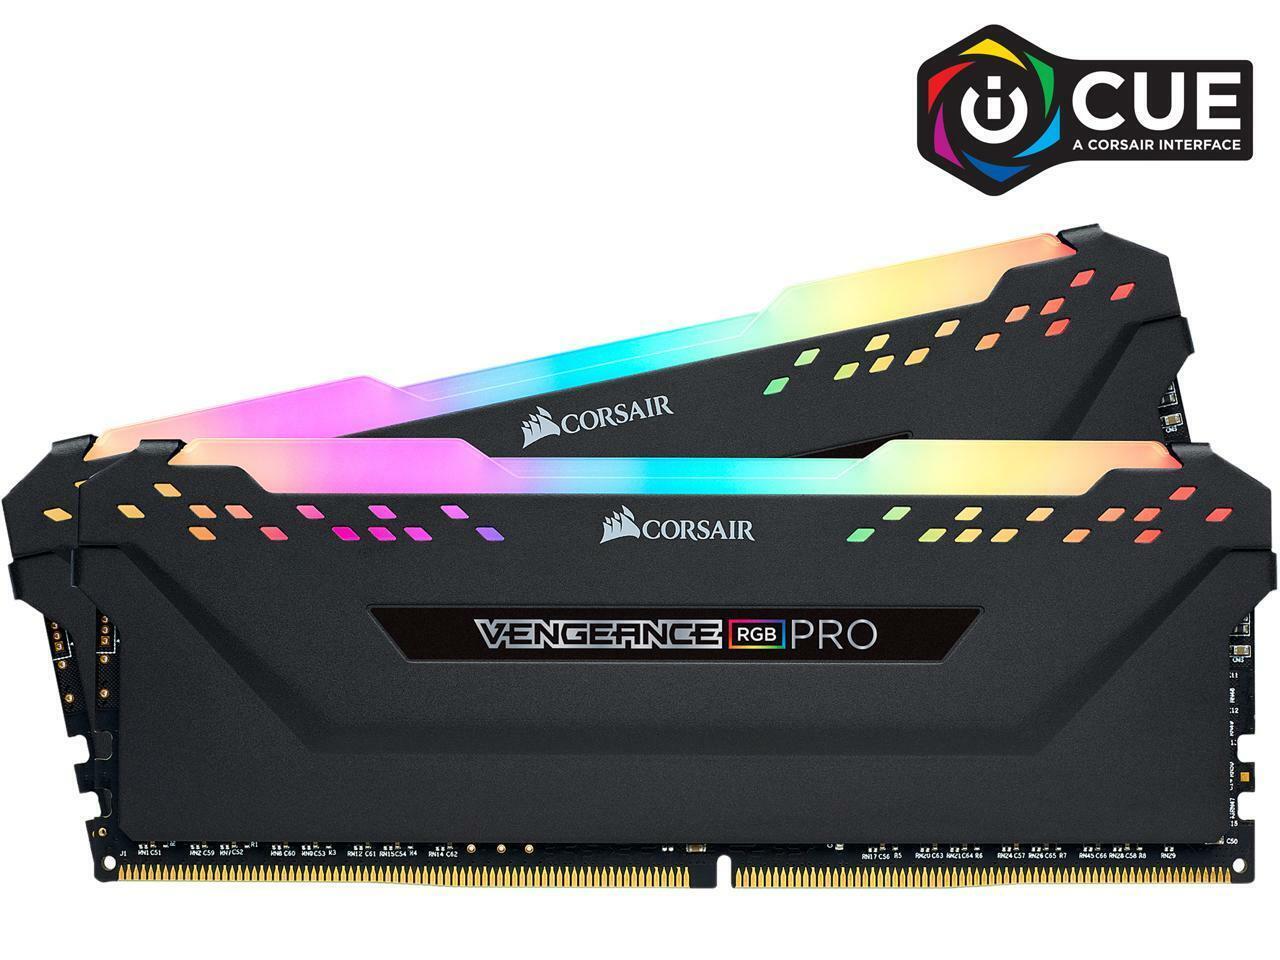 CORSAIR Vengeance RGB Pro 32GB (2 x 16GB) 288-Pin PC RAM DDR4 3200 (PC4 25600) I